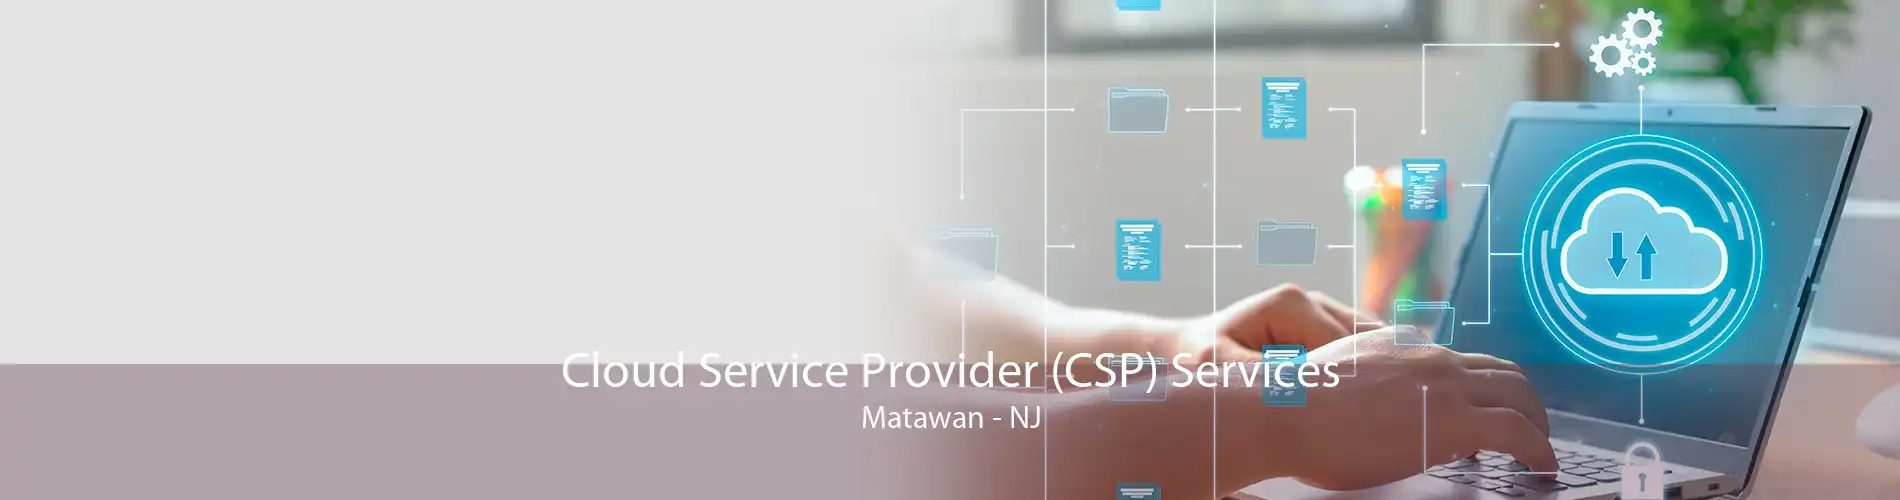 Cloud Service Provider (CSP) Services Matawan - NJ